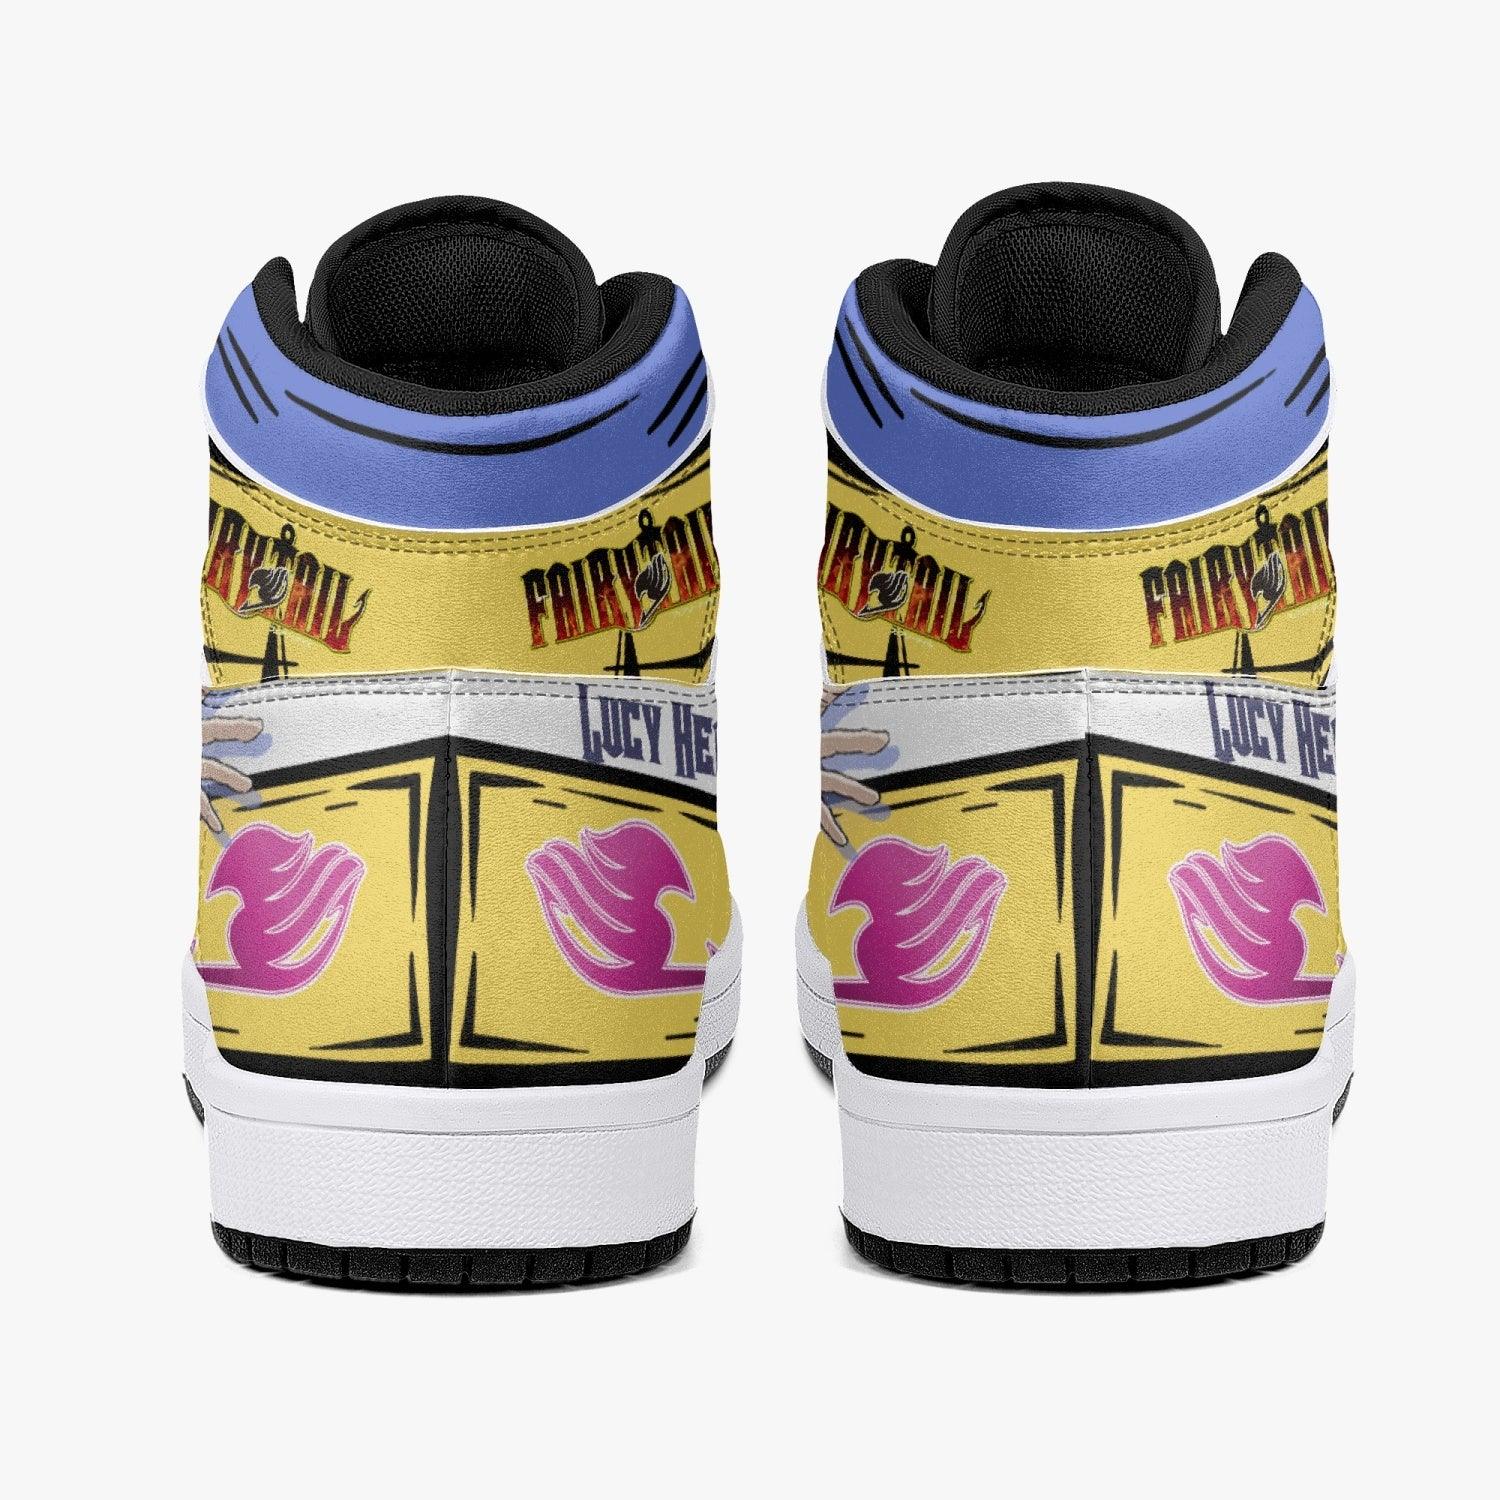 Lucy Heartfilia Fairy Tail J-Force Shoes-Black-Men-US5/EU38-Anime Shoe Shop